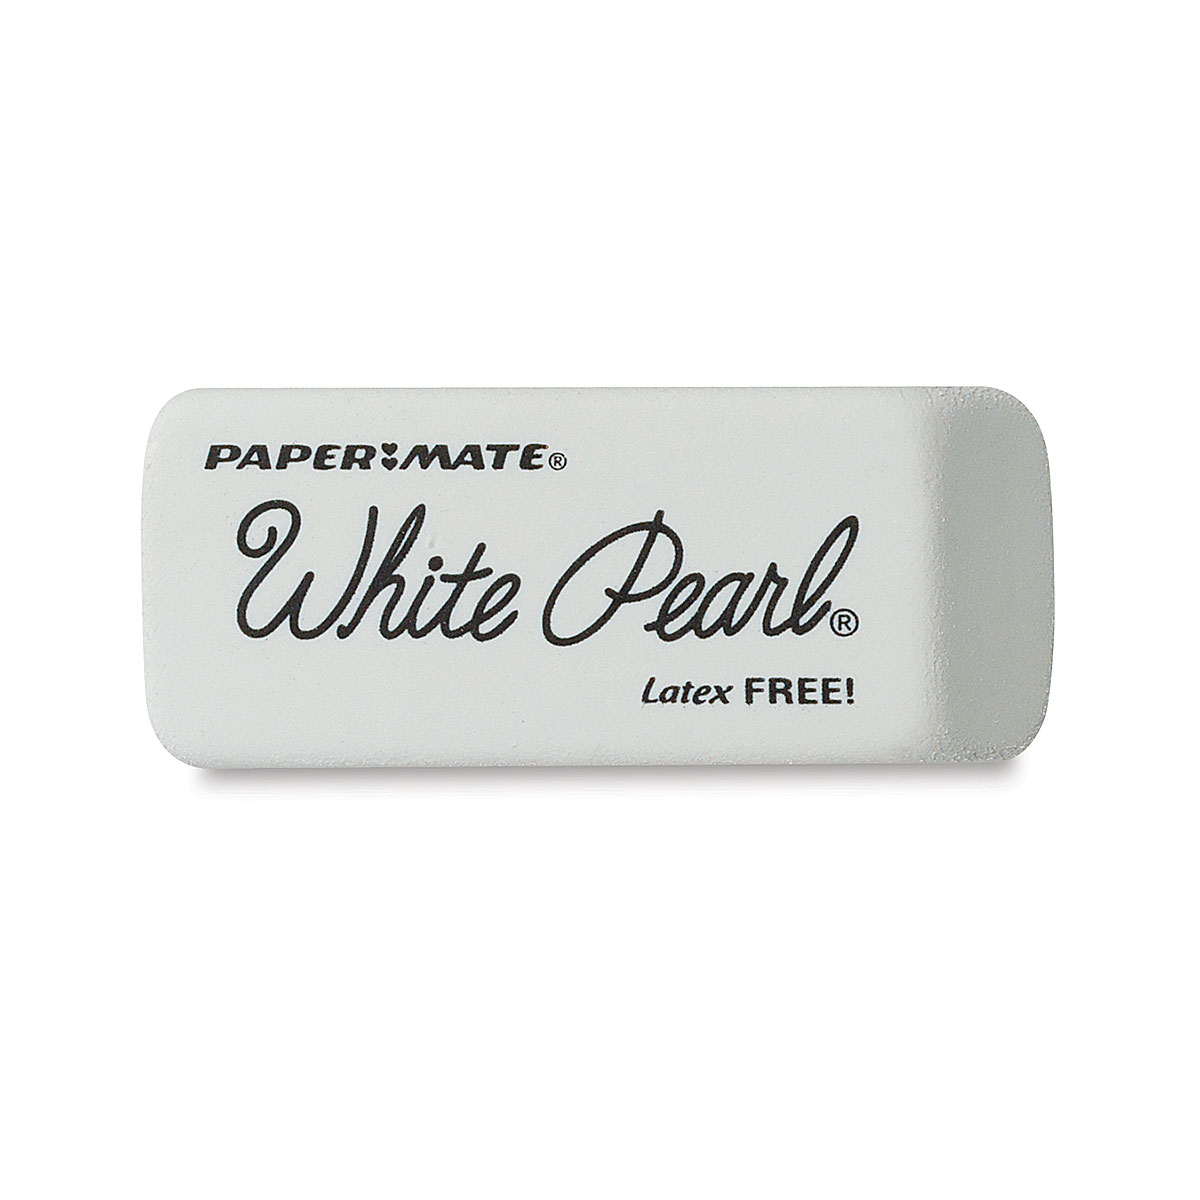 white erasers